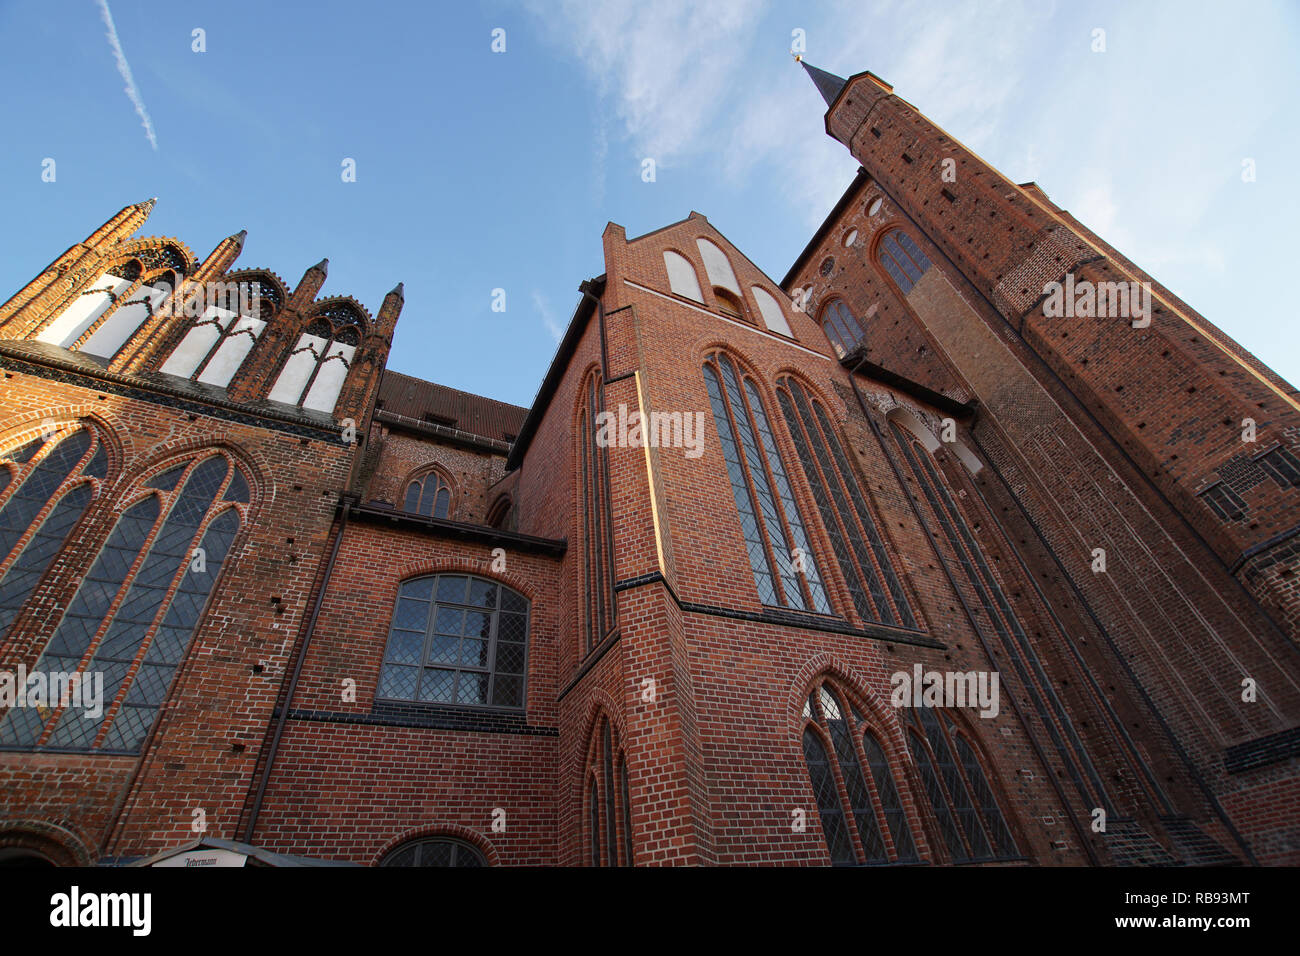 St. Georgen church in Wismar, Germany Stock Photo